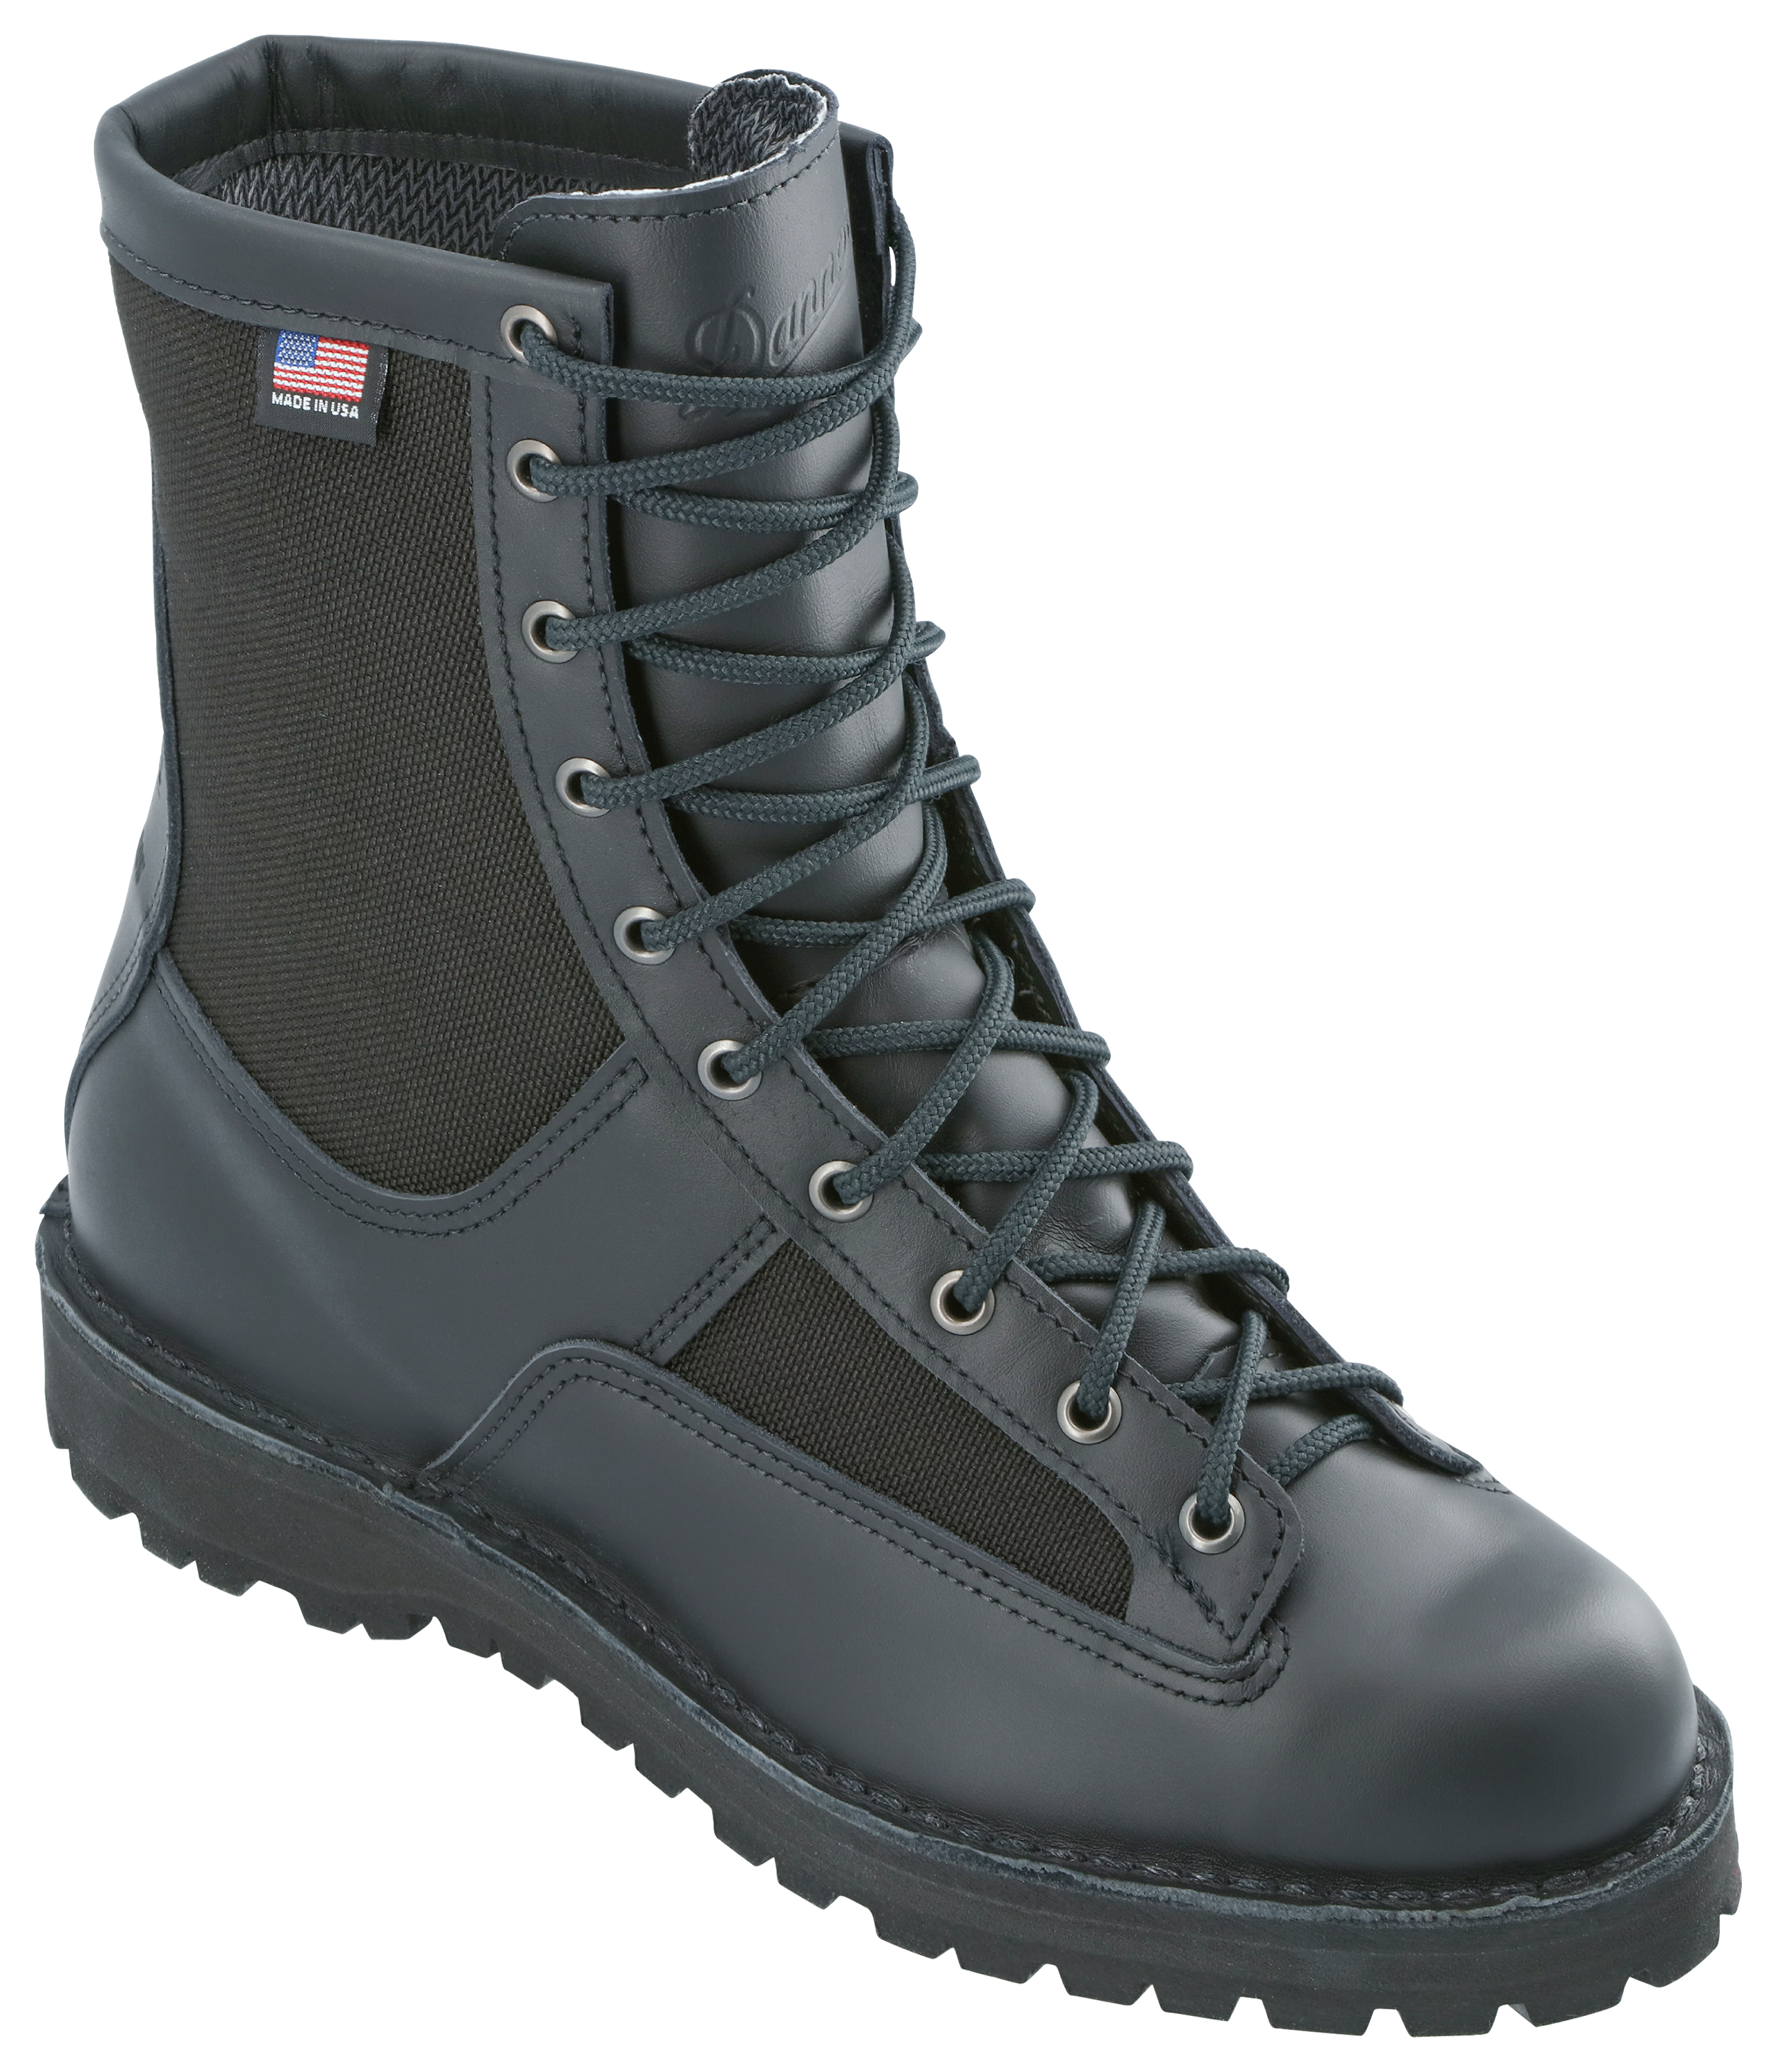 Danner Acadia GORE-TEX Duty Boots for Men - Black - 11W